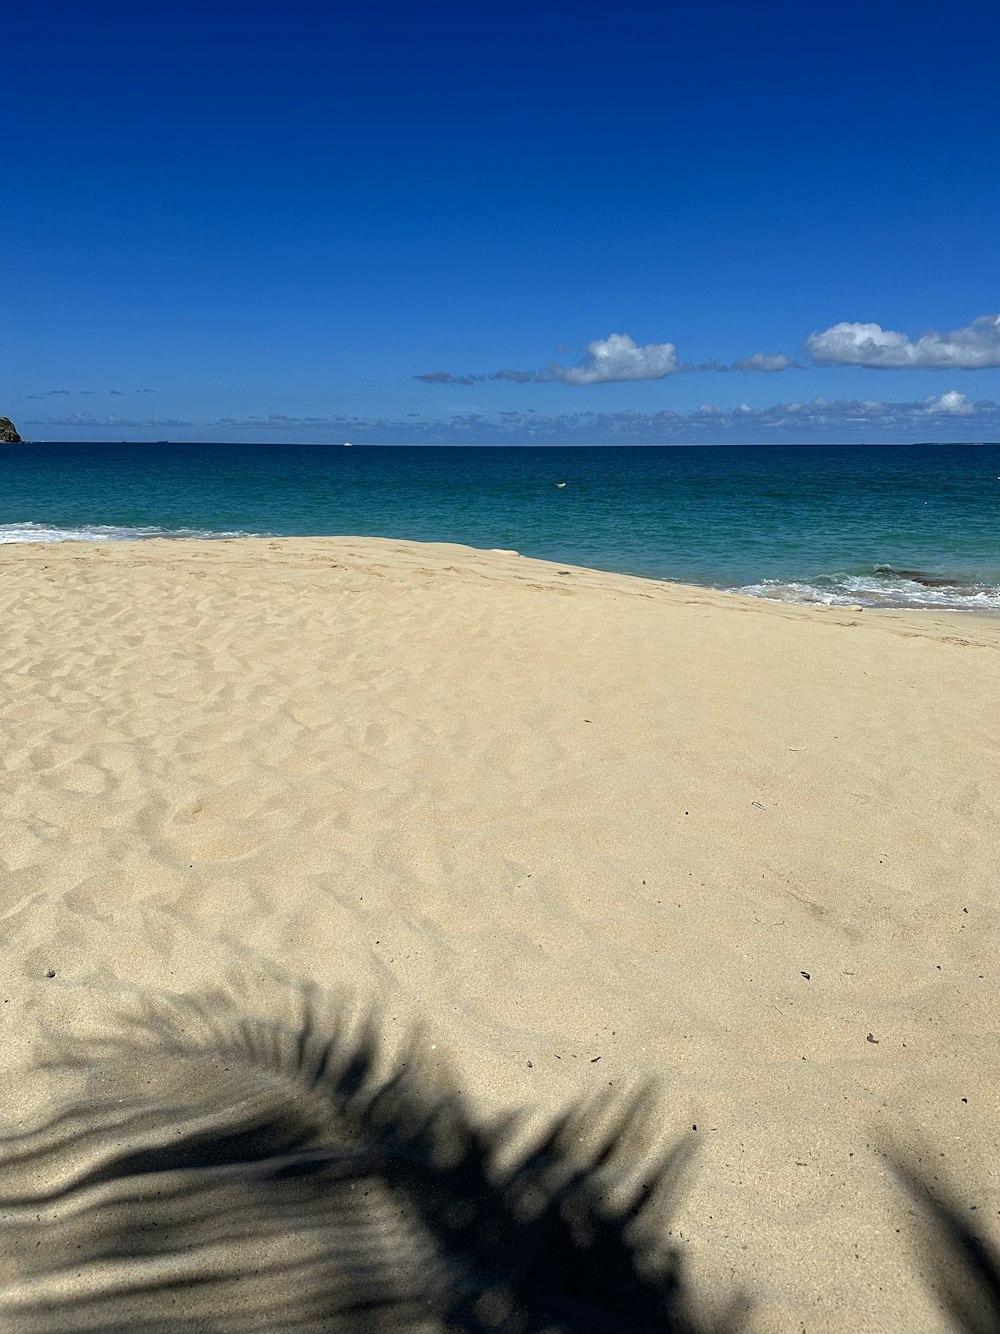 a shadow of a palm tree on a beach